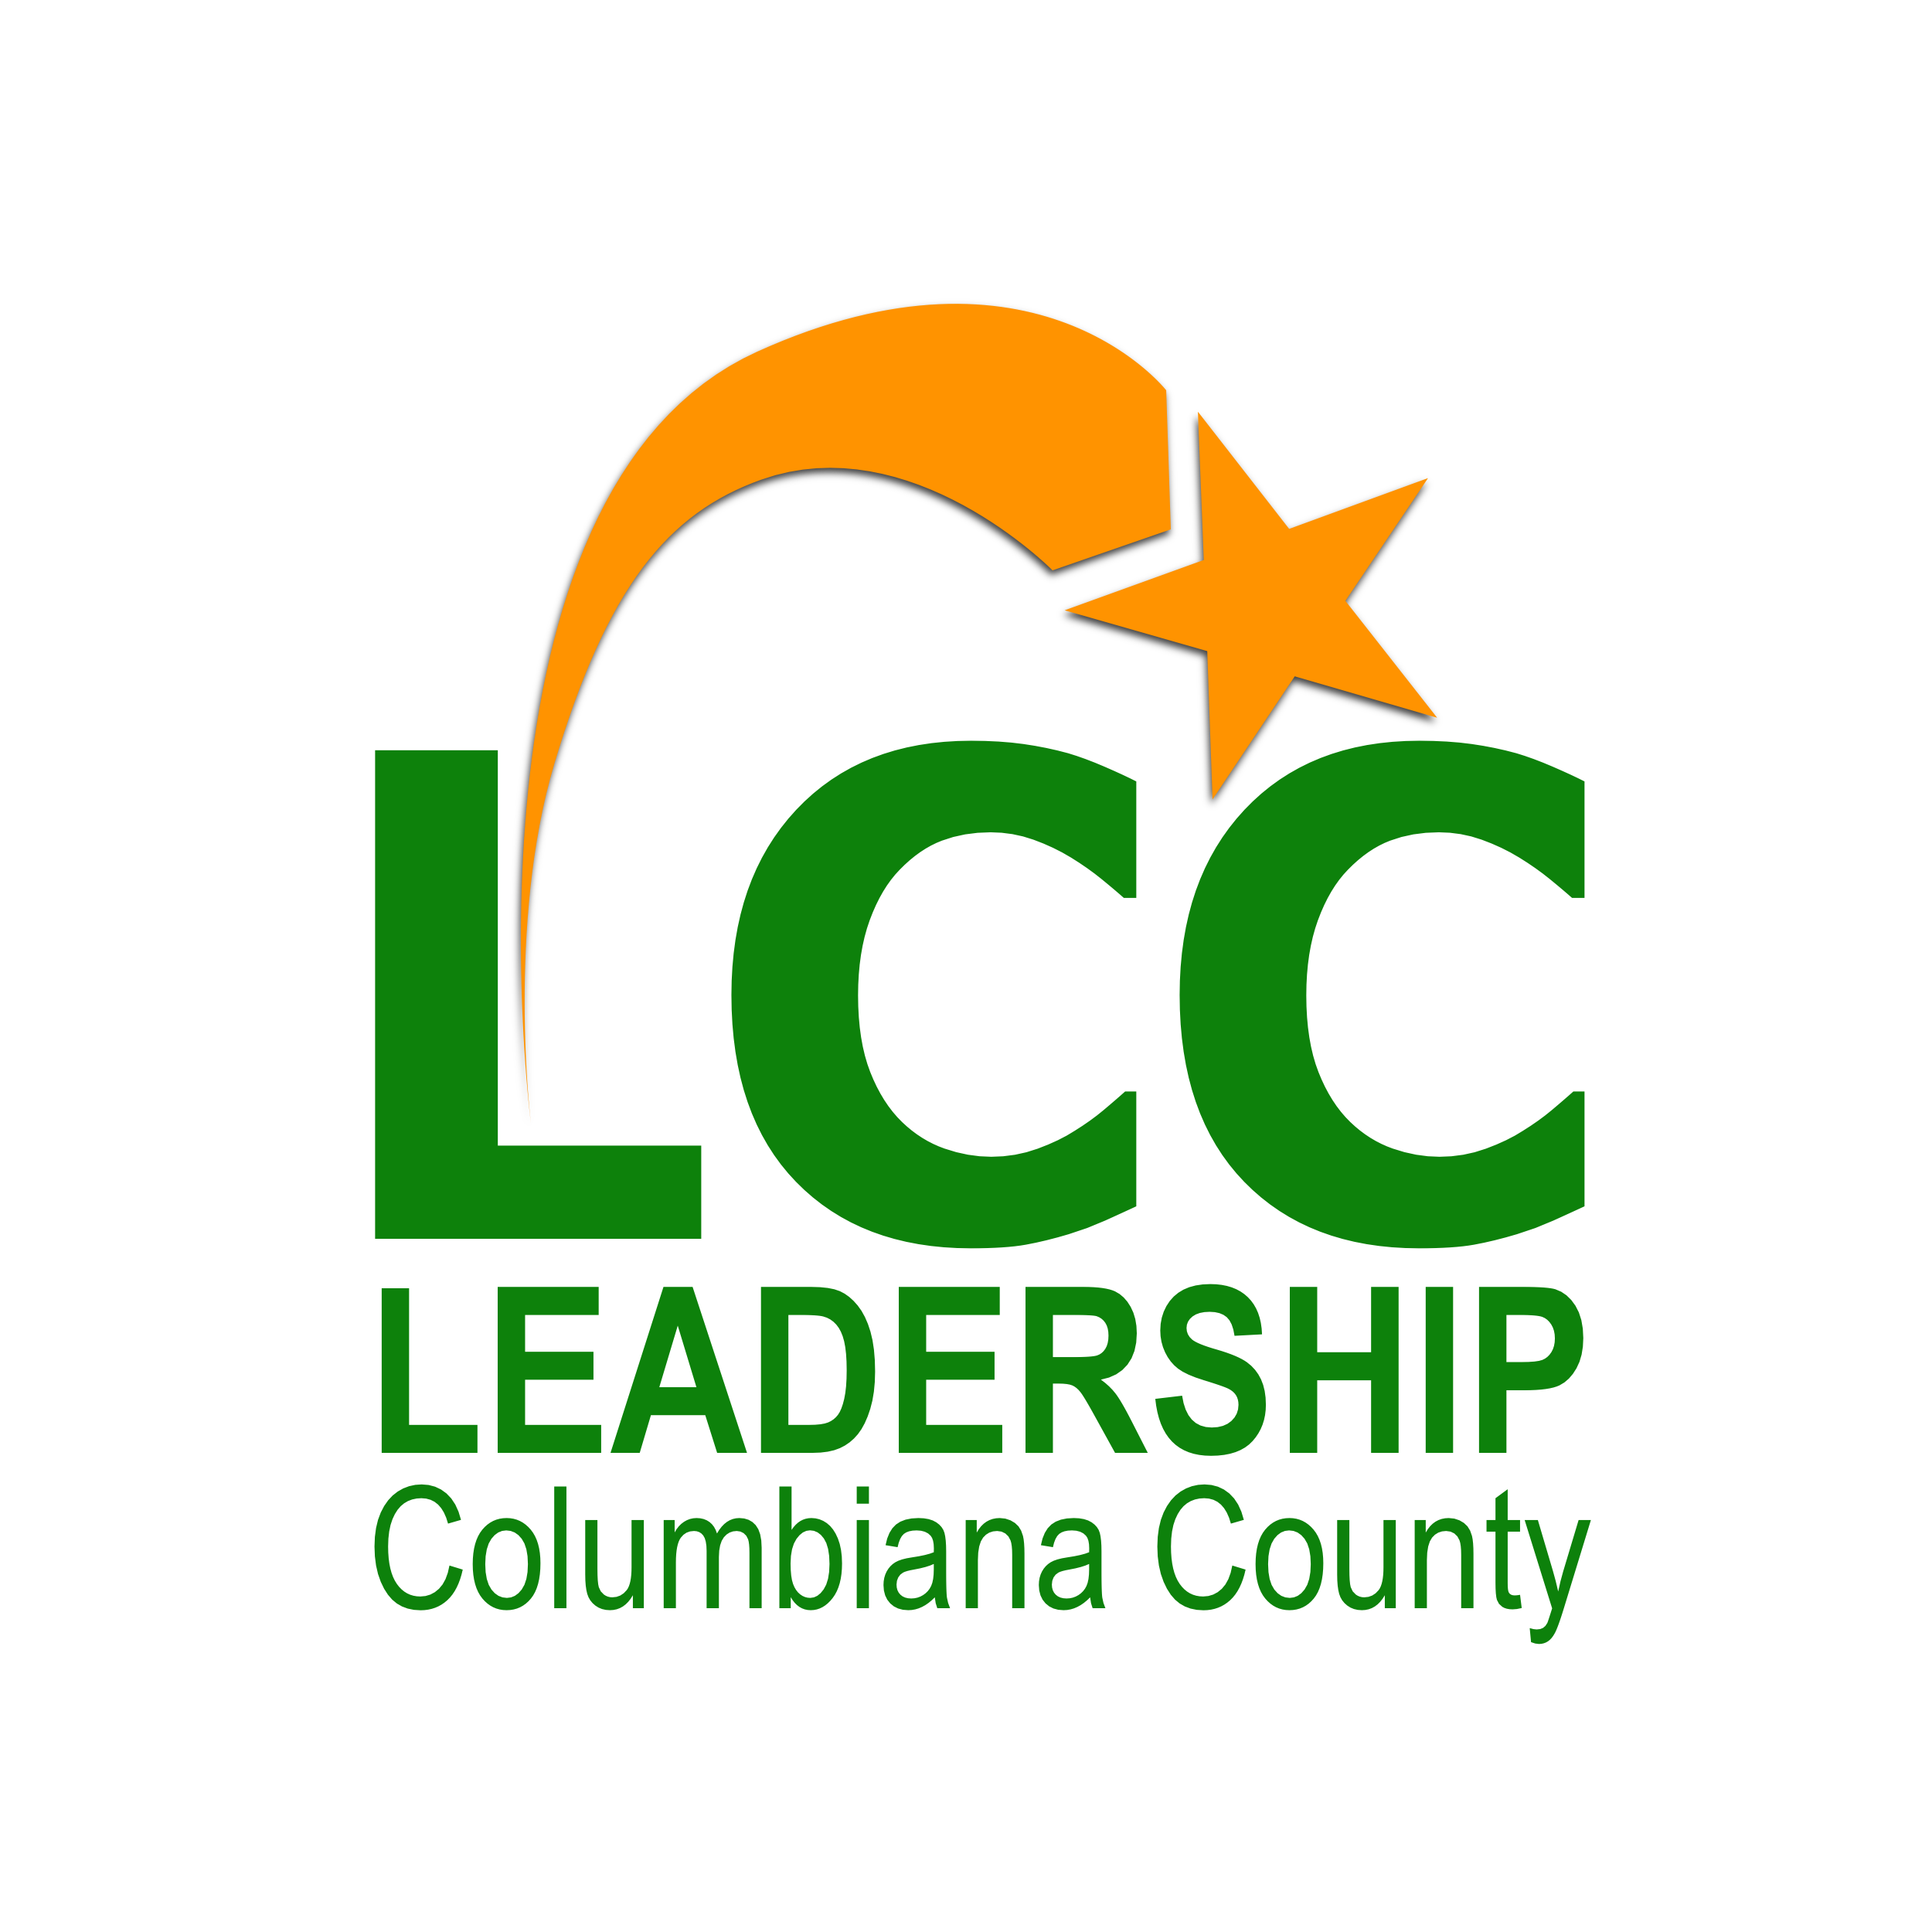 Jr LCC Leadership Columbiana County